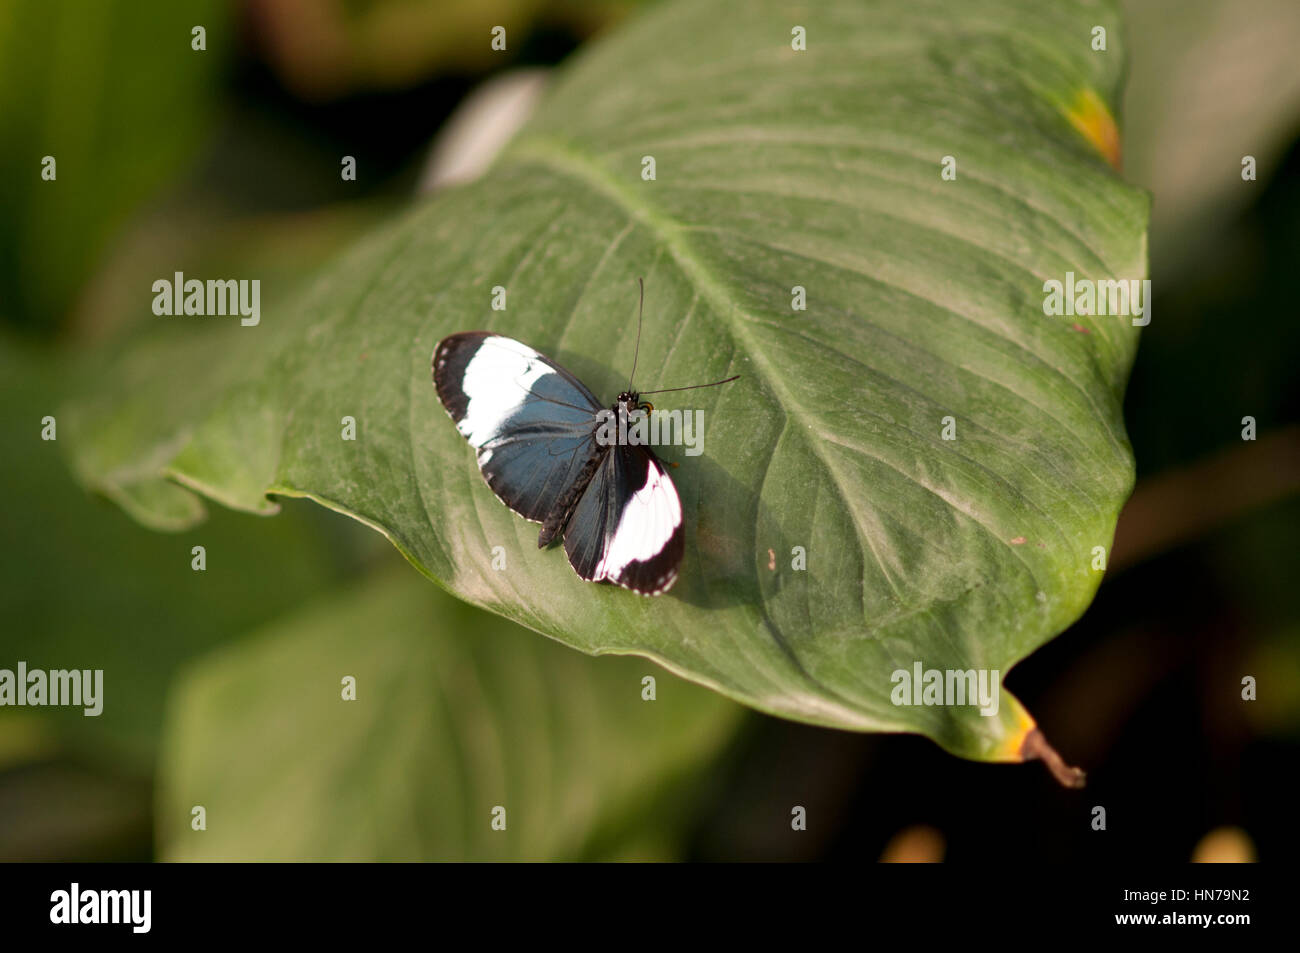 Beatiful butterfly in a tropical fresh garden Stock Photo